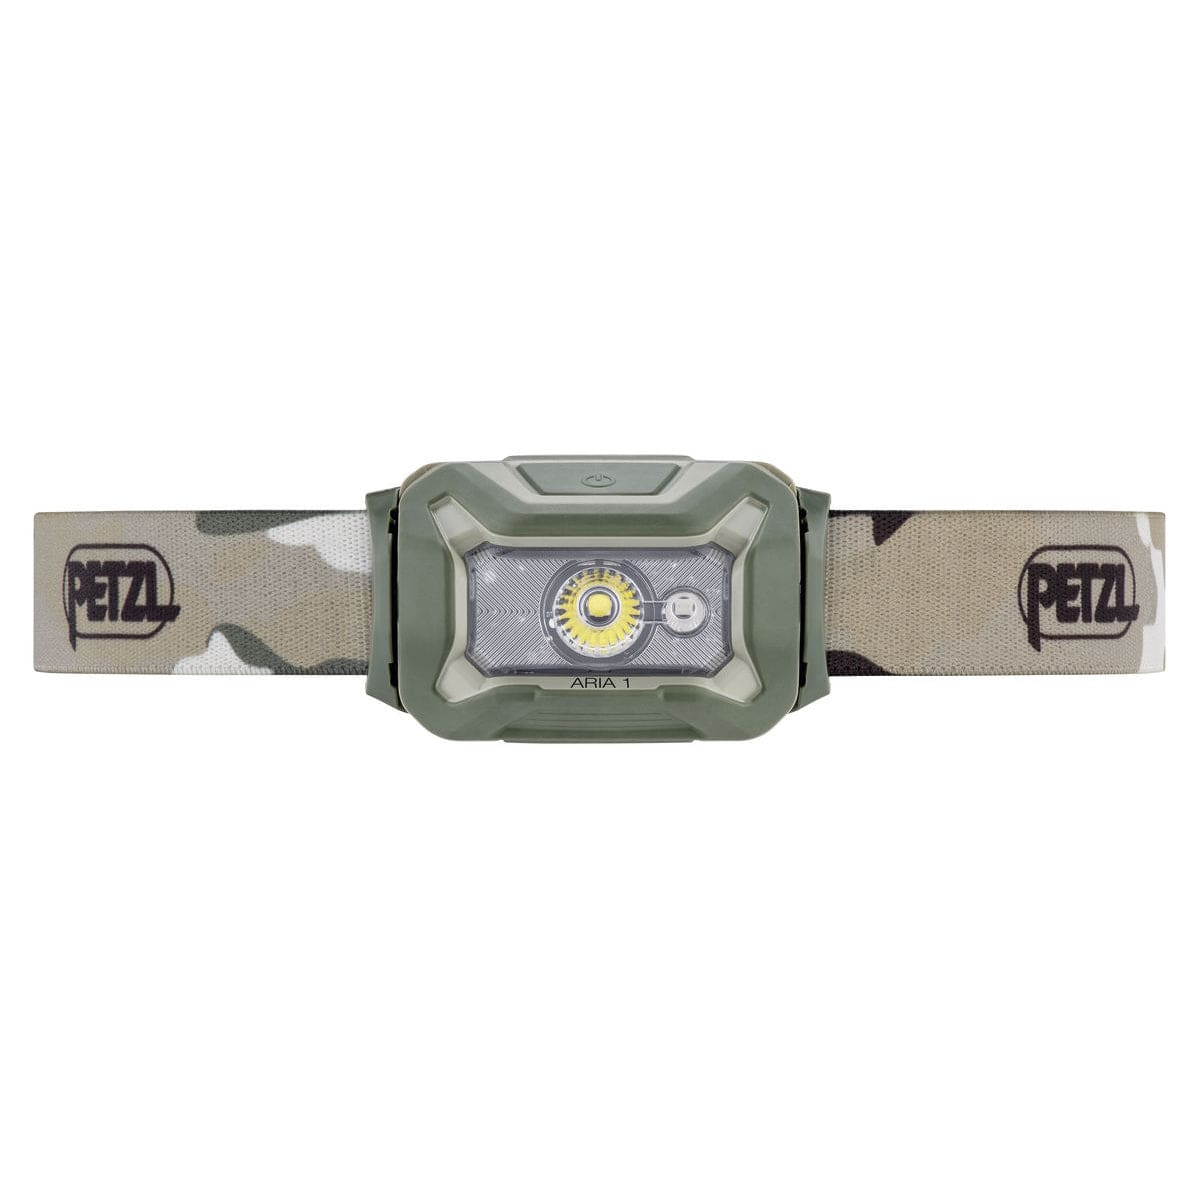 Lampe Frontale compacte Petzl ARIA 1 – 350 Lumens